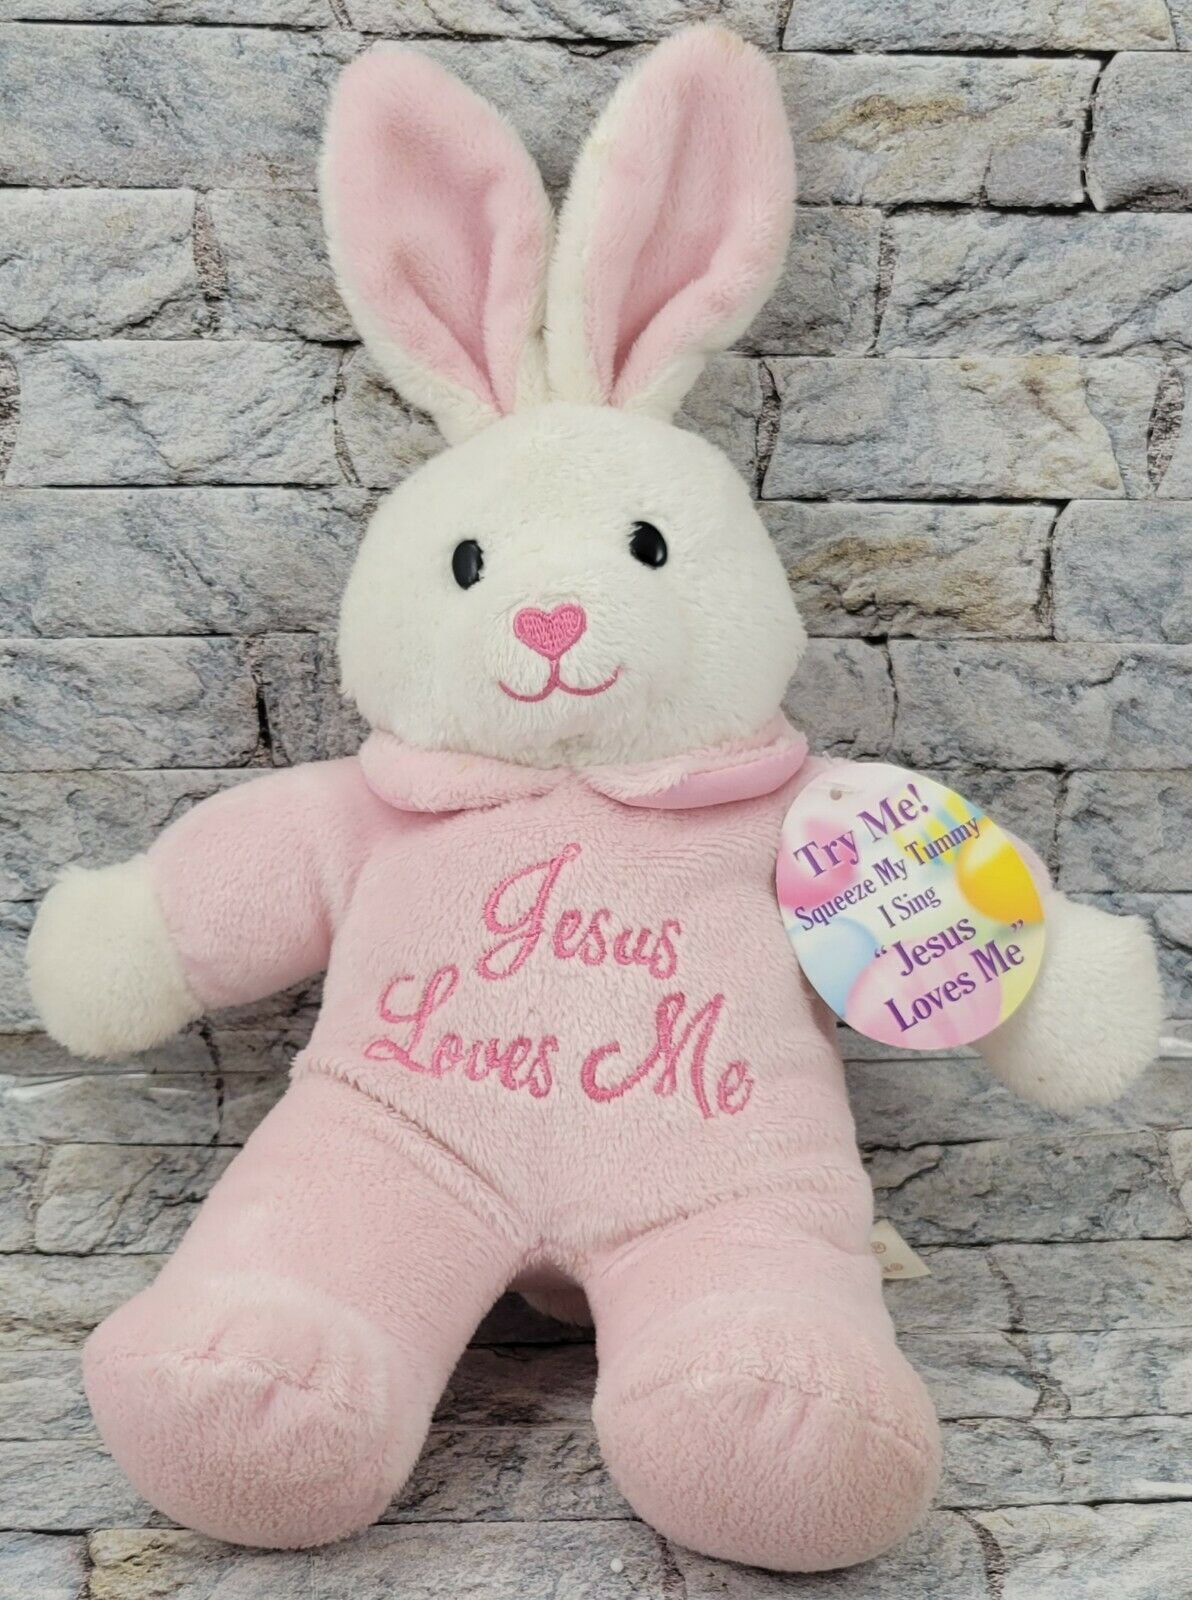 Dan Dee Bunny Rabbit Christian Stuffed Animal Jesus Loves Me New Plush Toy + Tag